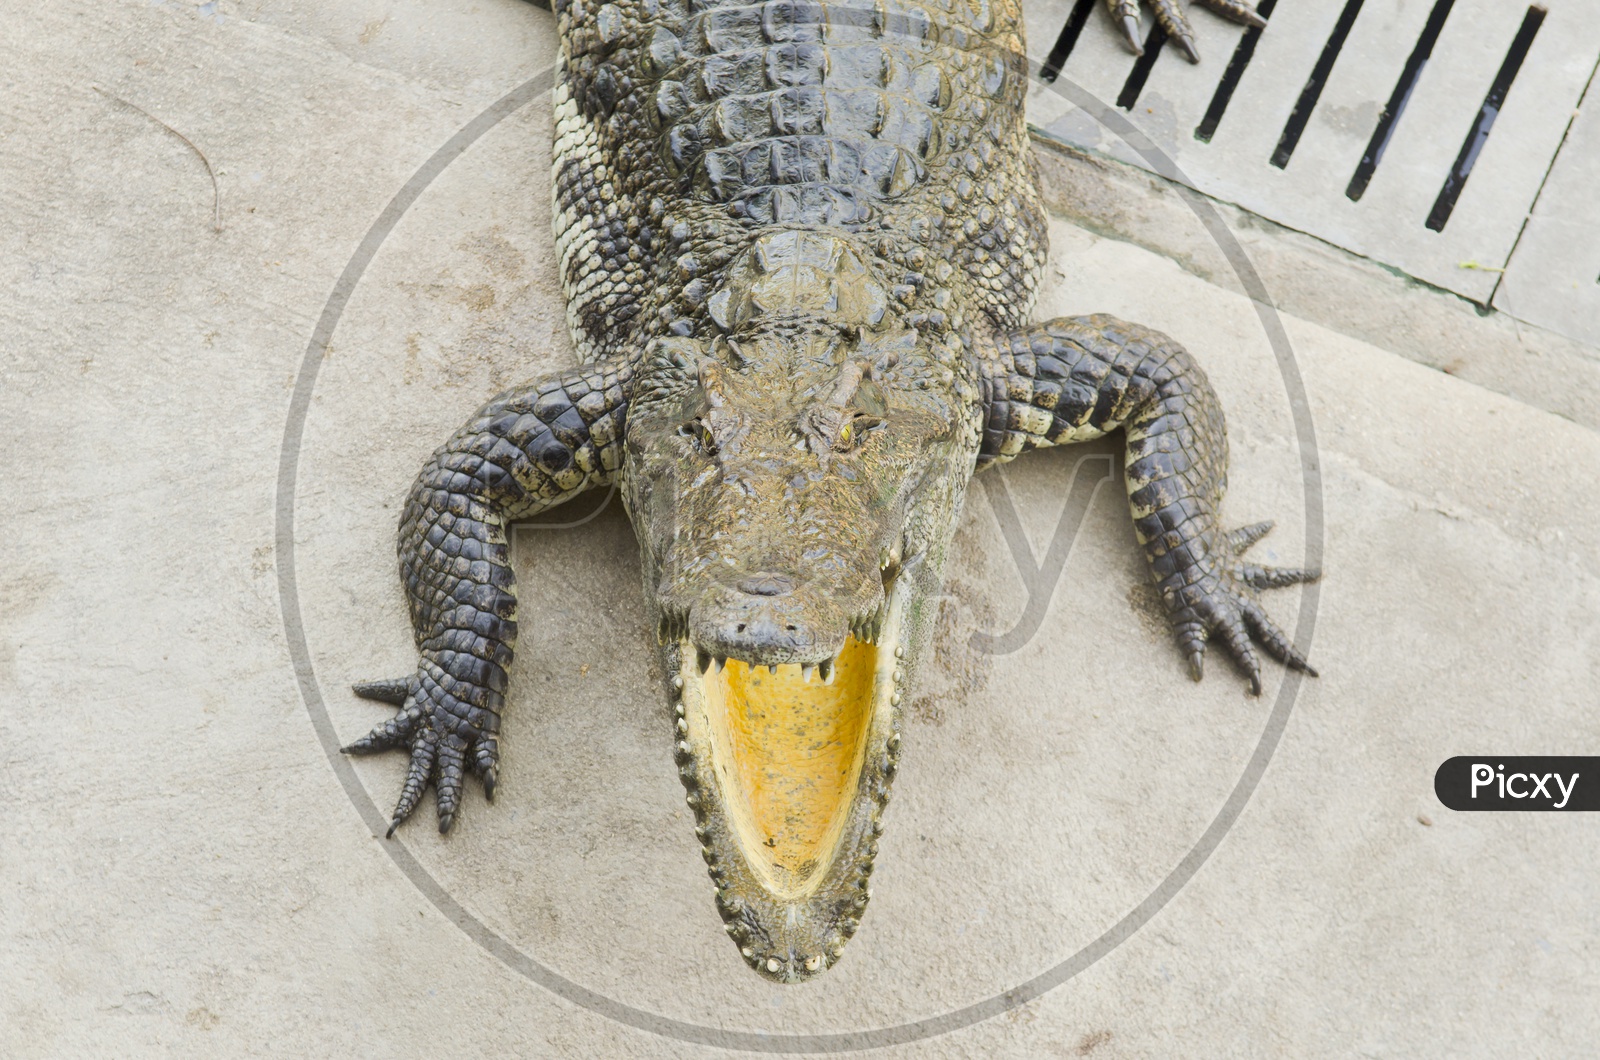 Crocodile Mouth Open In a Zoo